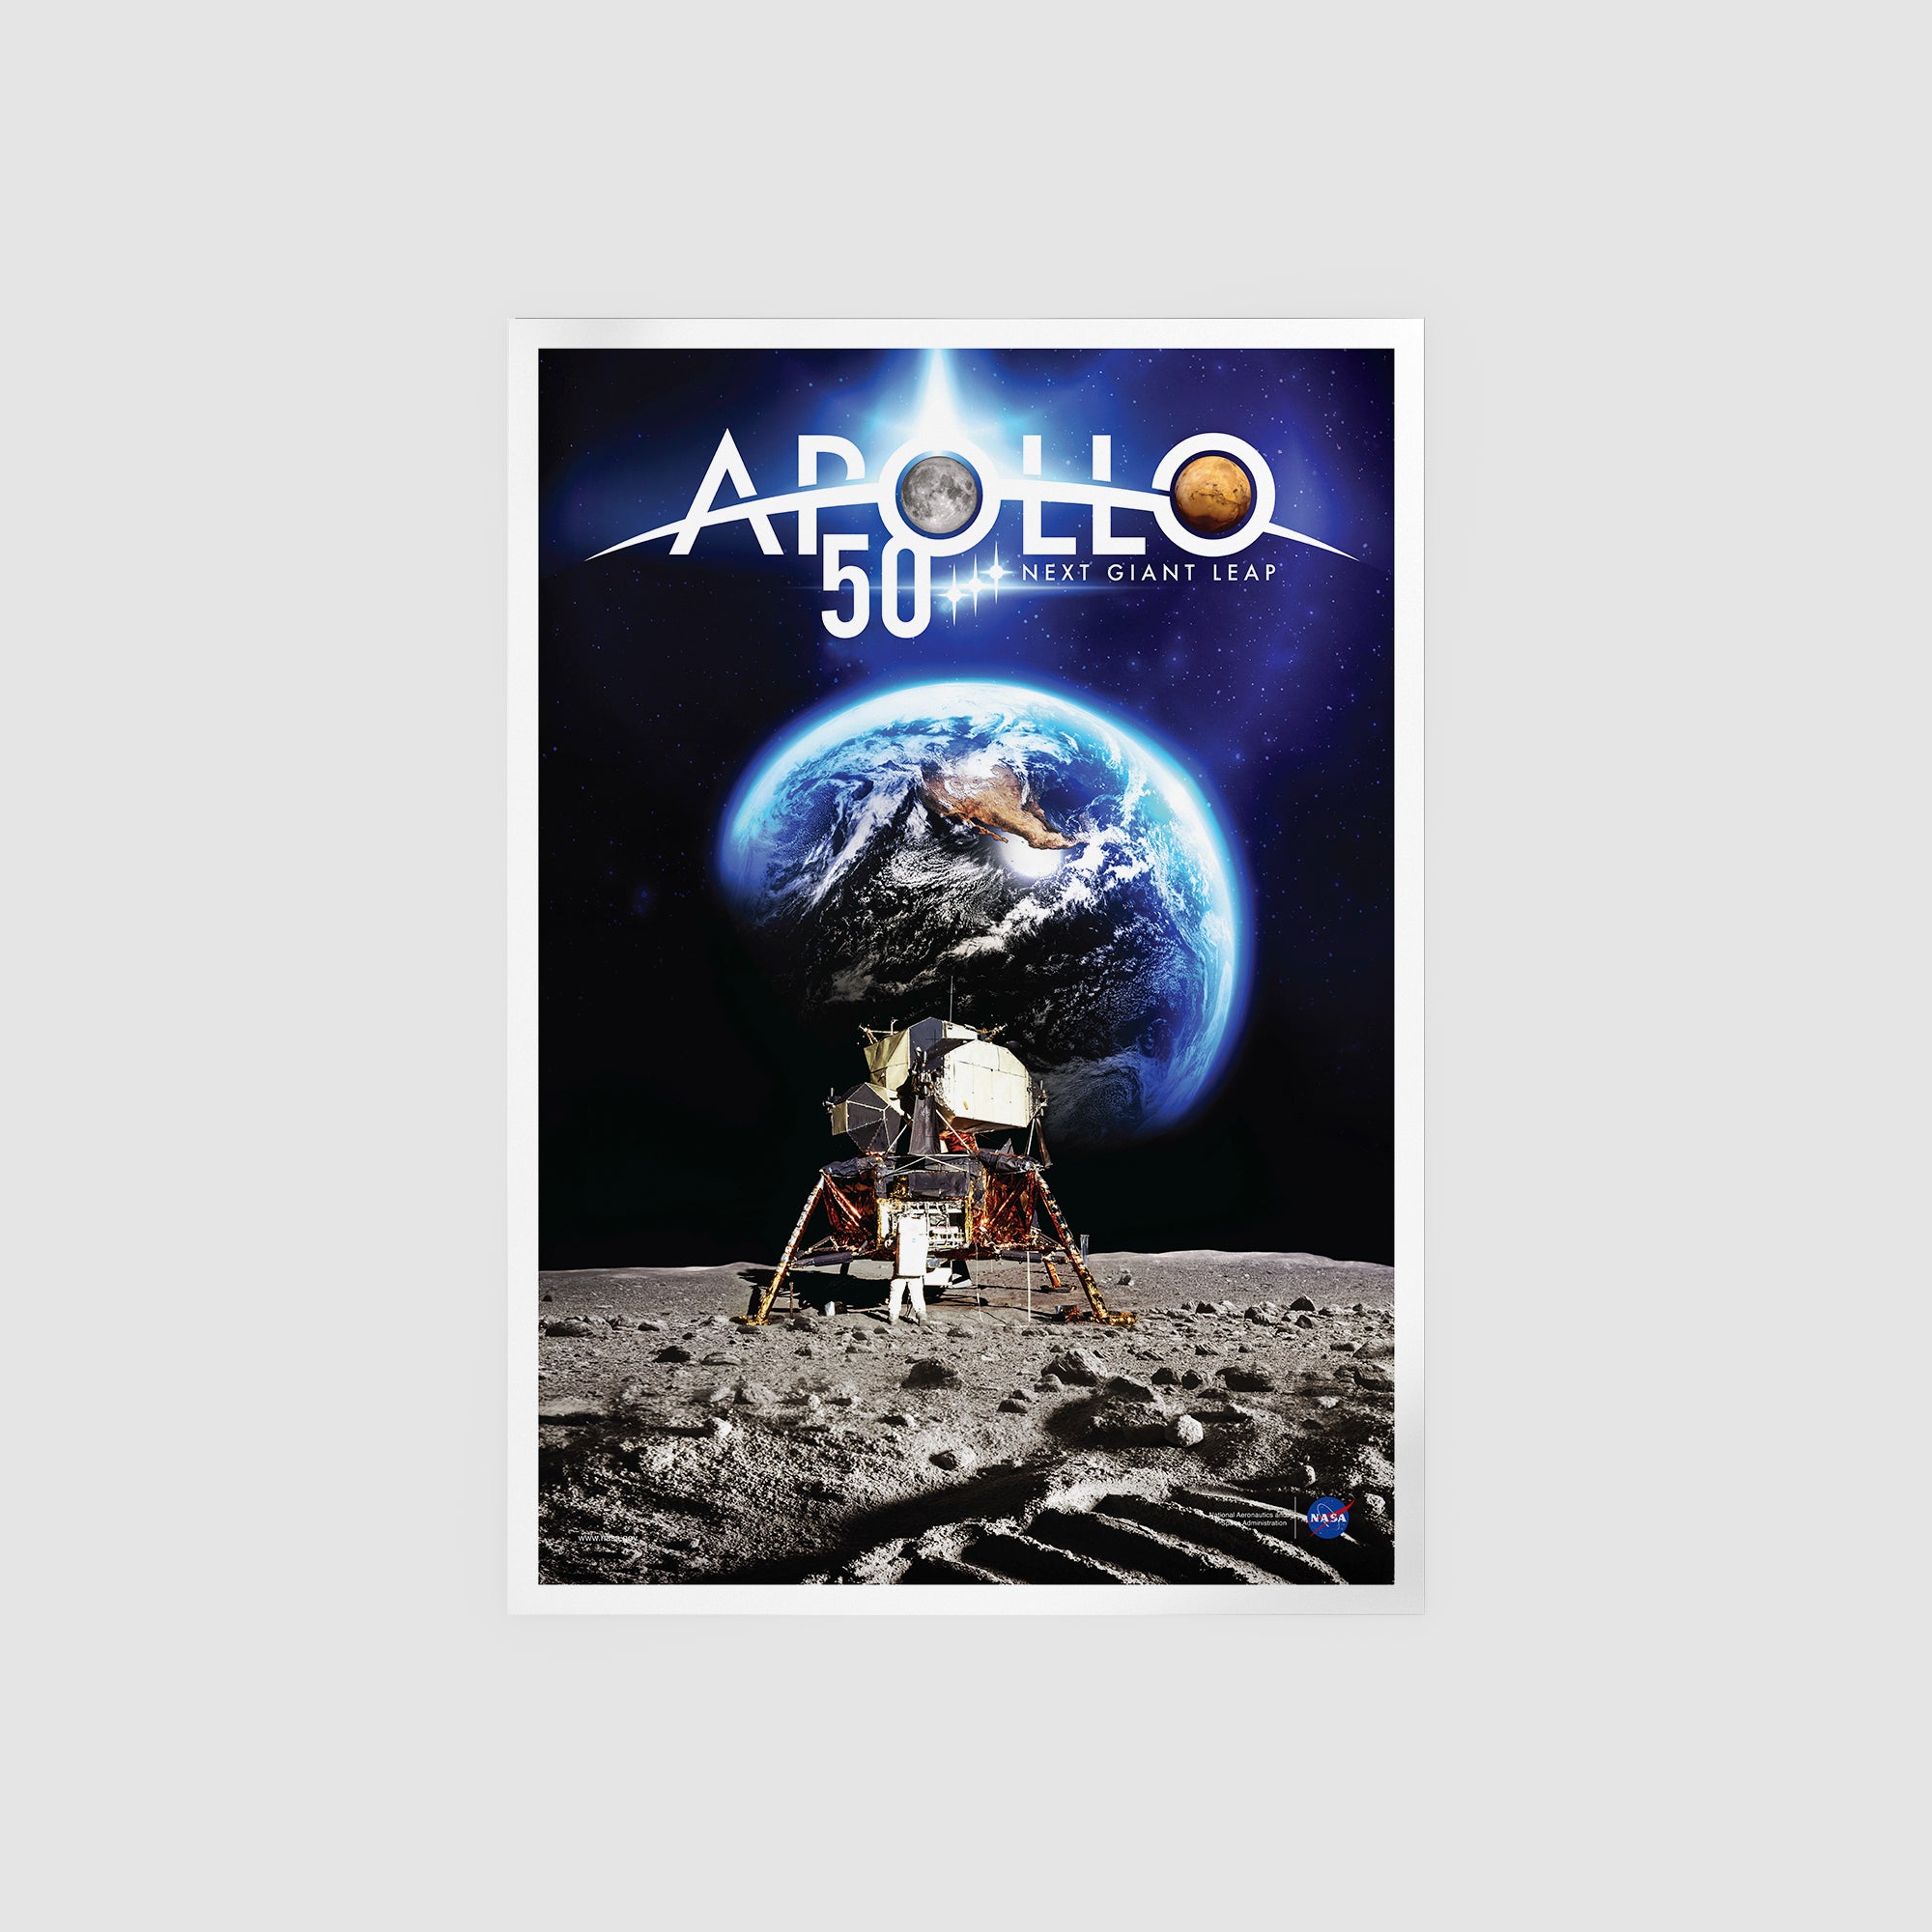 50 Years Of Apollo - The Next Giant Leap